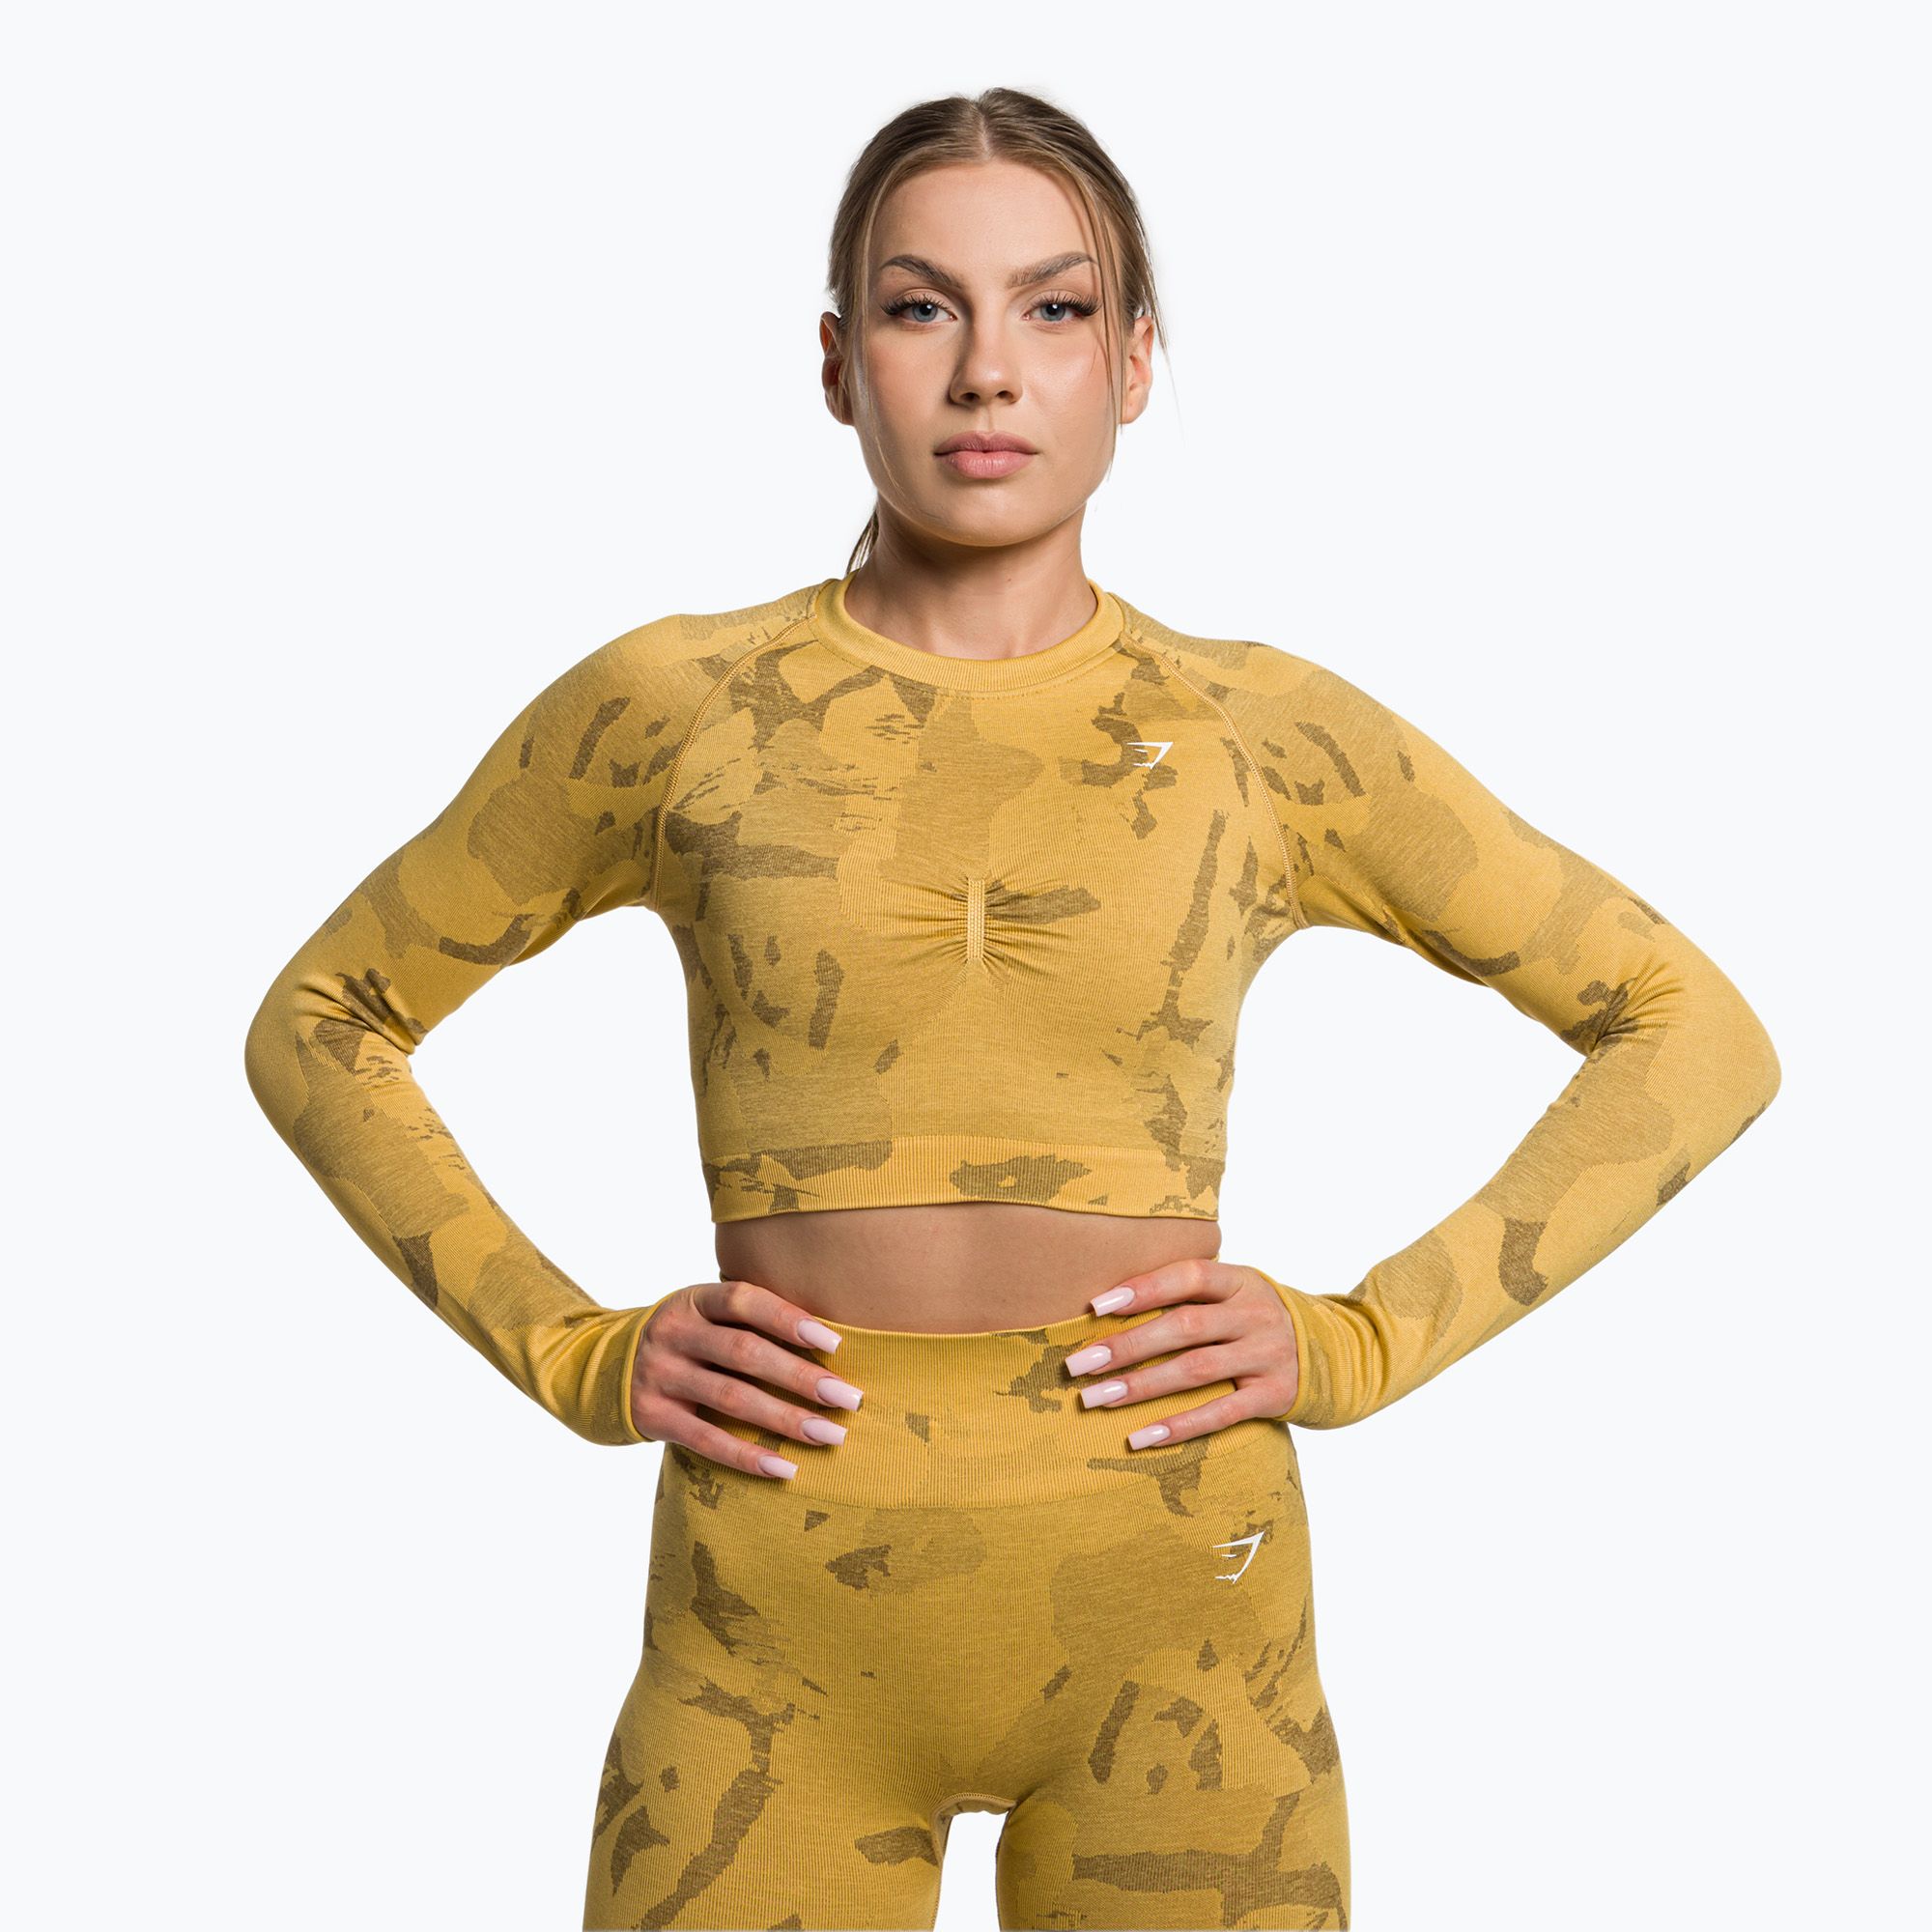 https://sportano.com/img/986c30c27a3d26a3ee16c136f92f4ff5/5/0/5057913508722_1-jpg/women-s-training-leggings-gymshark-adapt-camo-savanna-seamless-indian-yellow-0.jpg